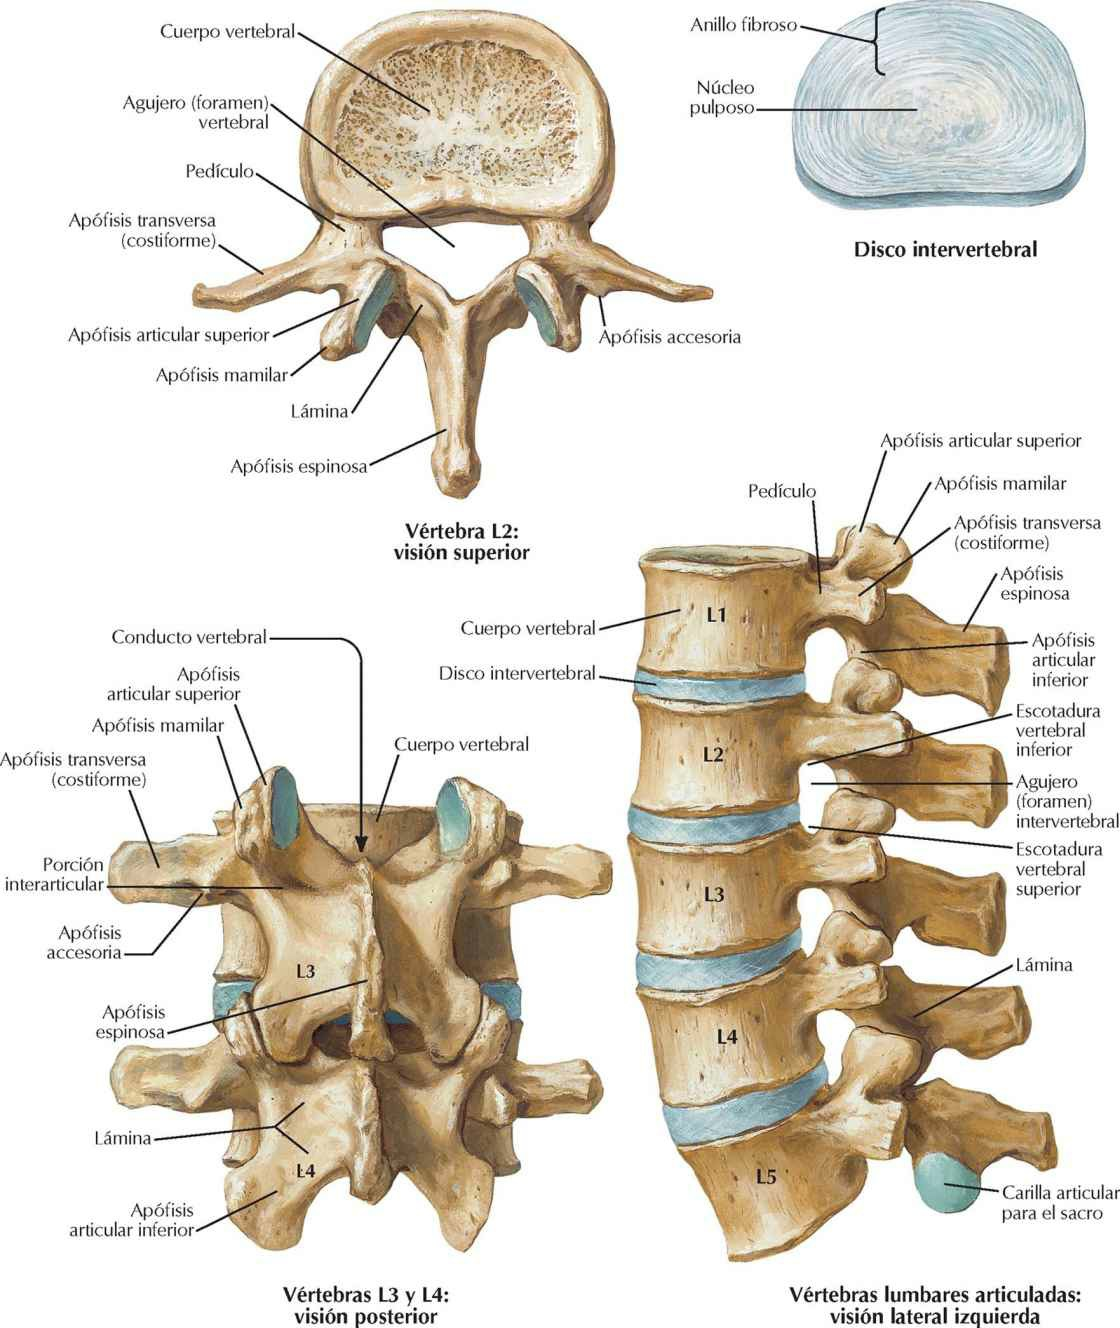 Vértebras lumbares